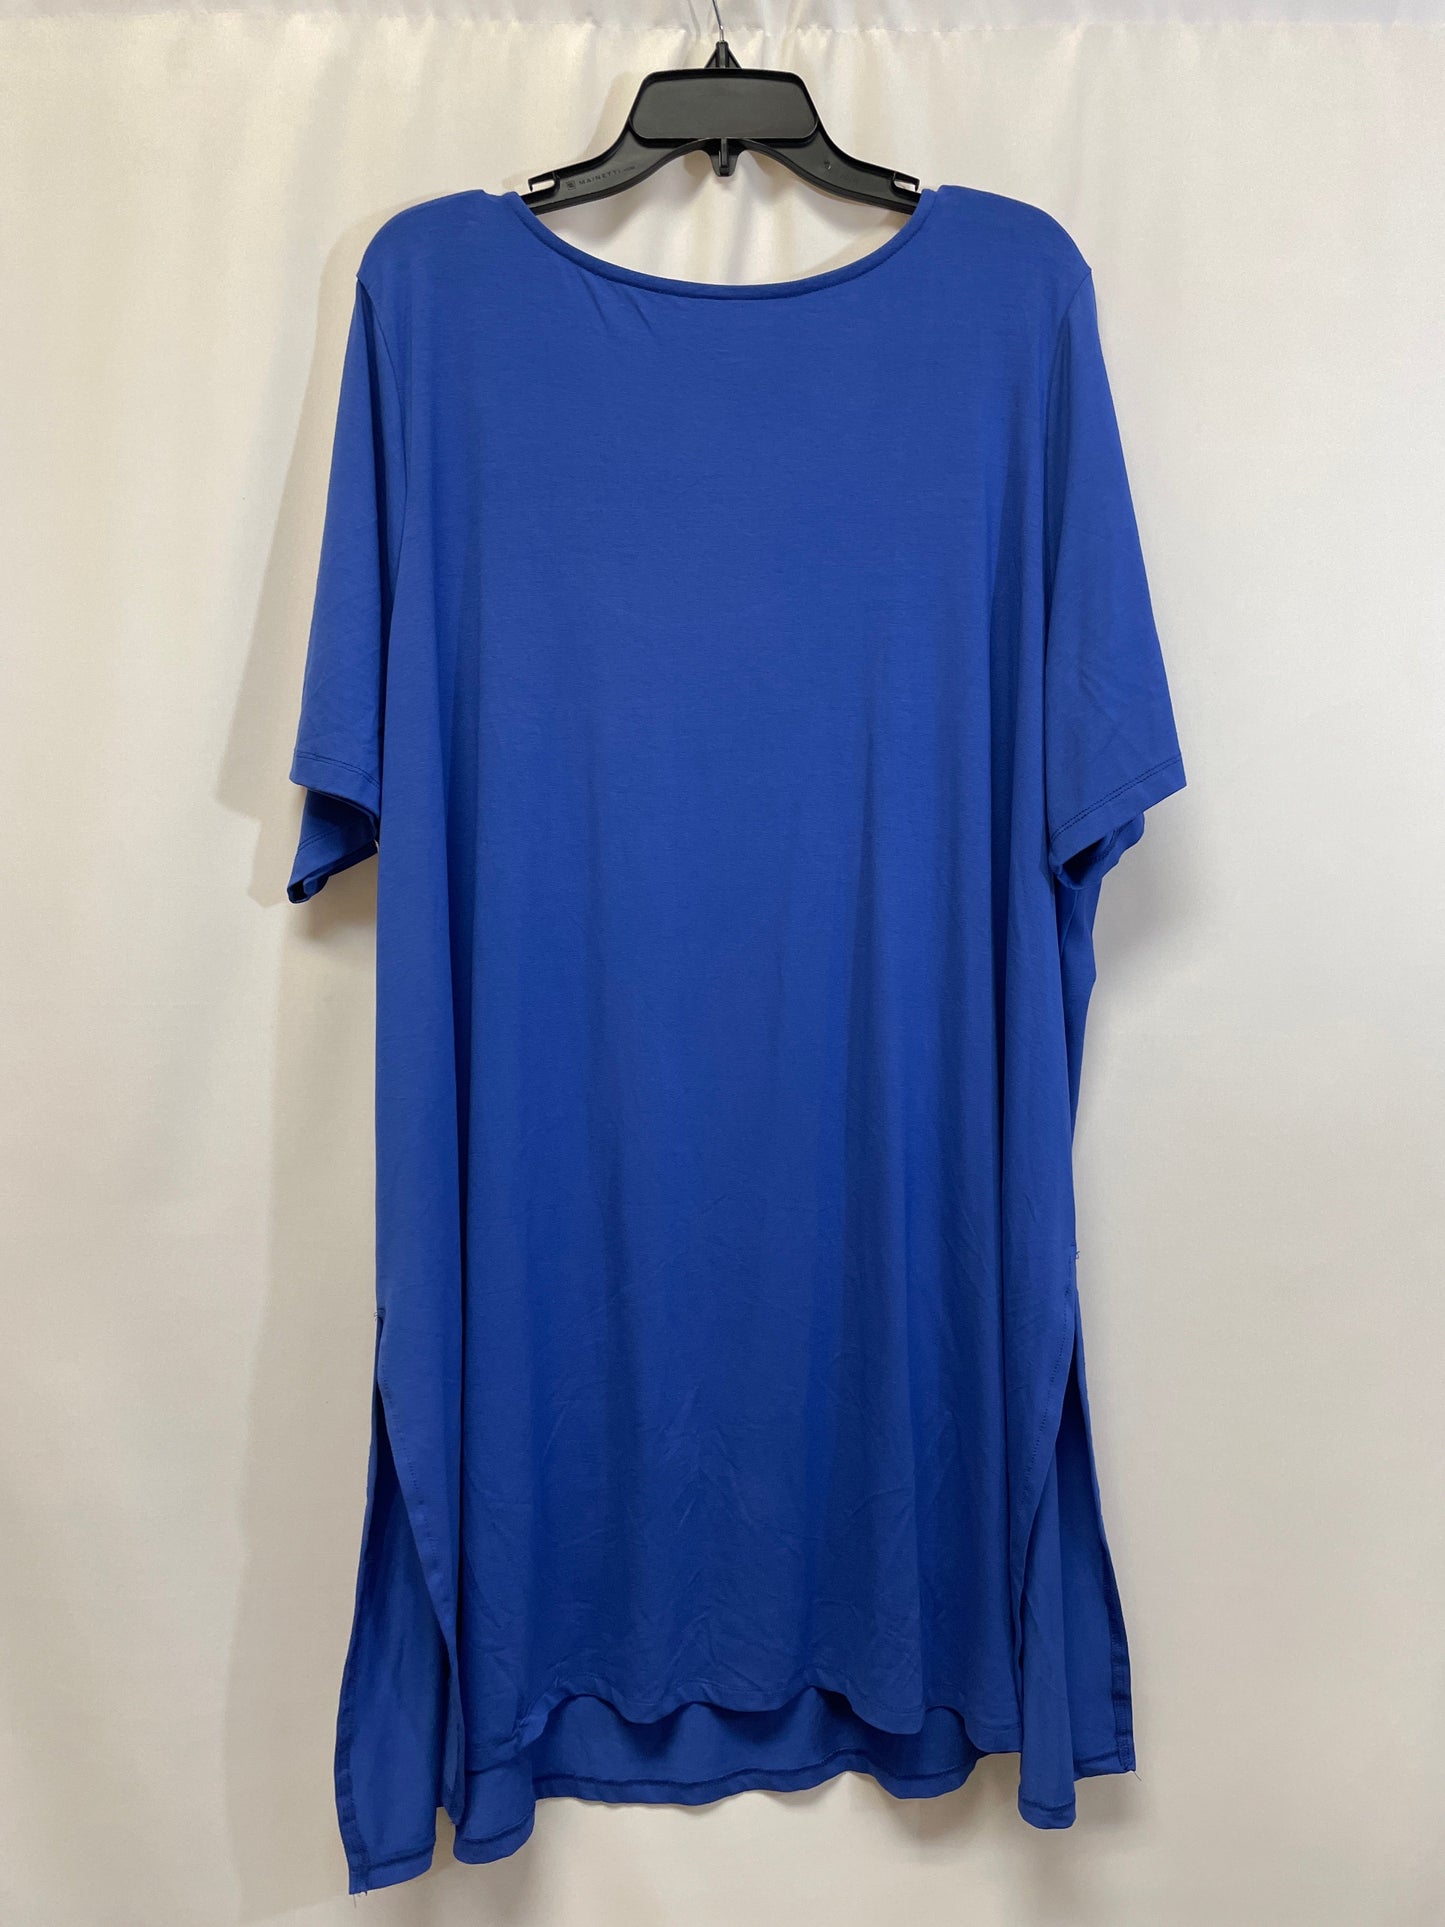 Blue Tunic Short Sleeve Jessica London, Size 4x